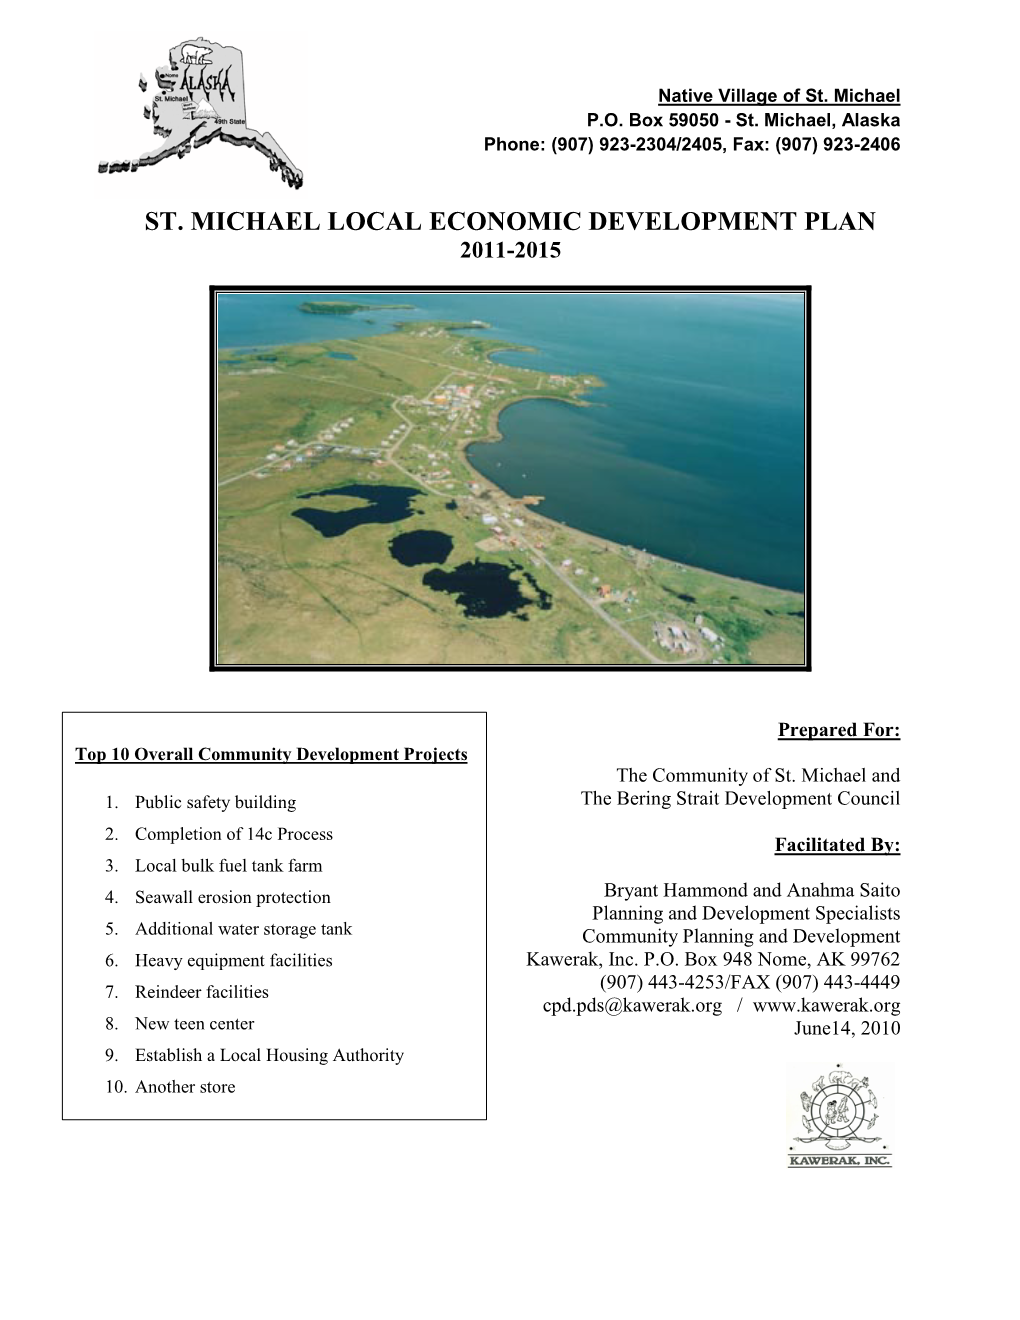 St. Michael Local Economic Development Plan 2011-2015